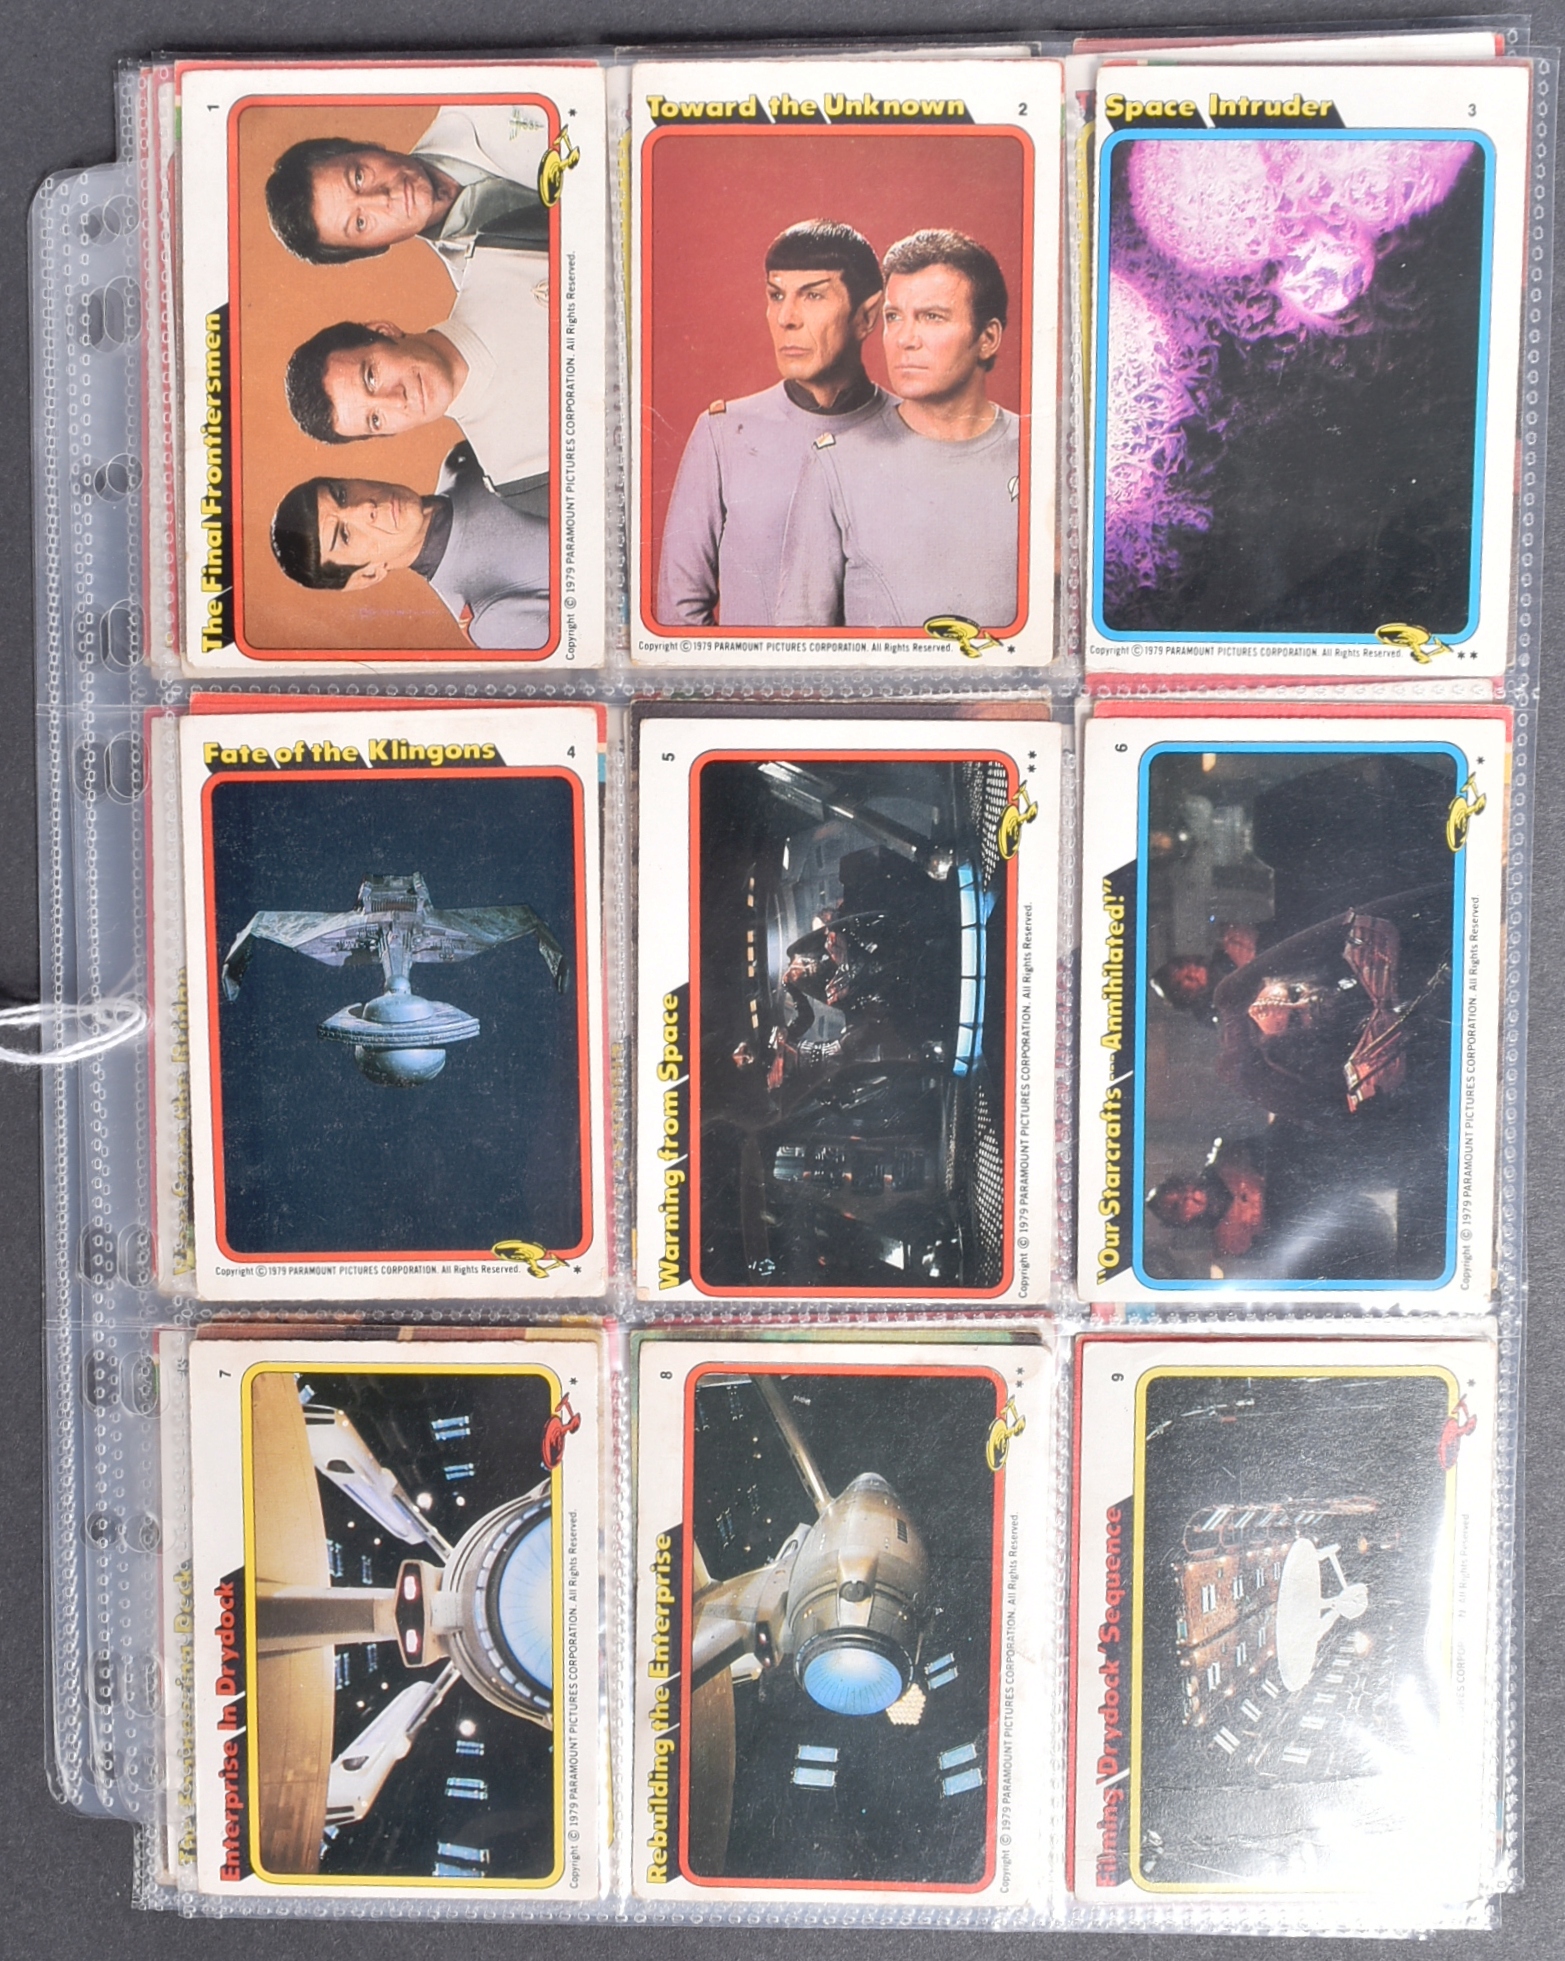 STAR TREK THE MOTION PICTURE - 1979 - FULL SET OF BUBBLEGUM CARDS - Image 2 of 4